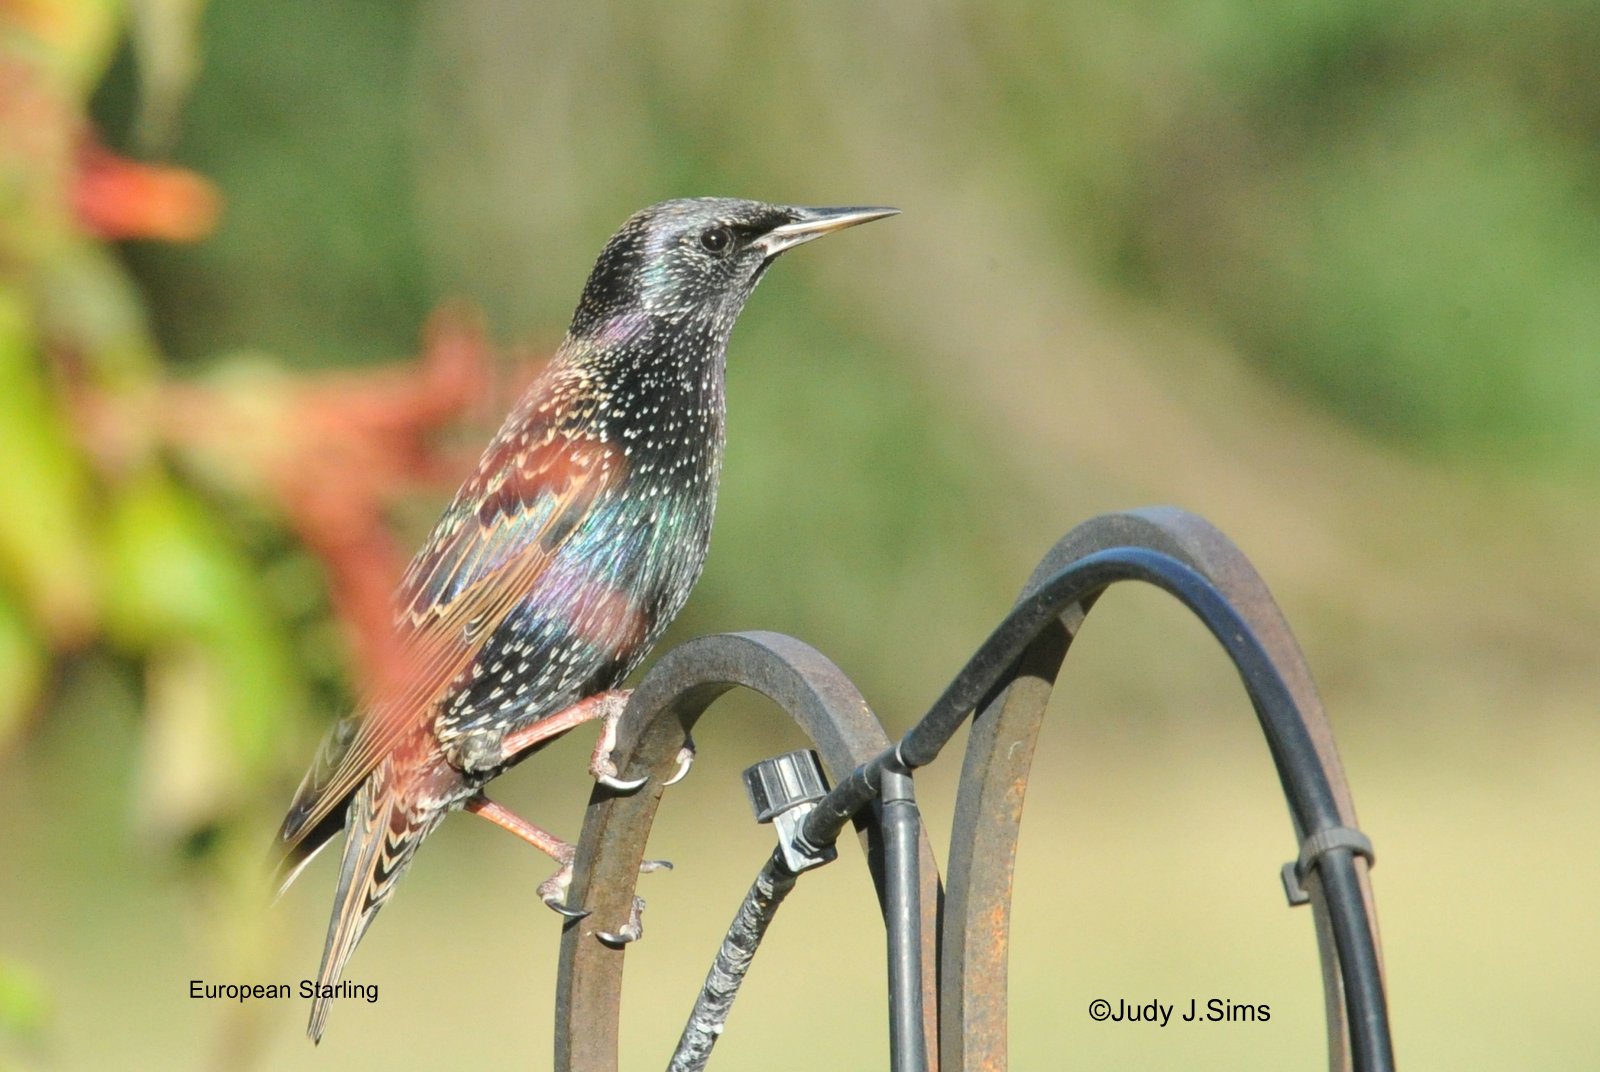 East Texas Birder on The Move: More Birds of My Backyard!